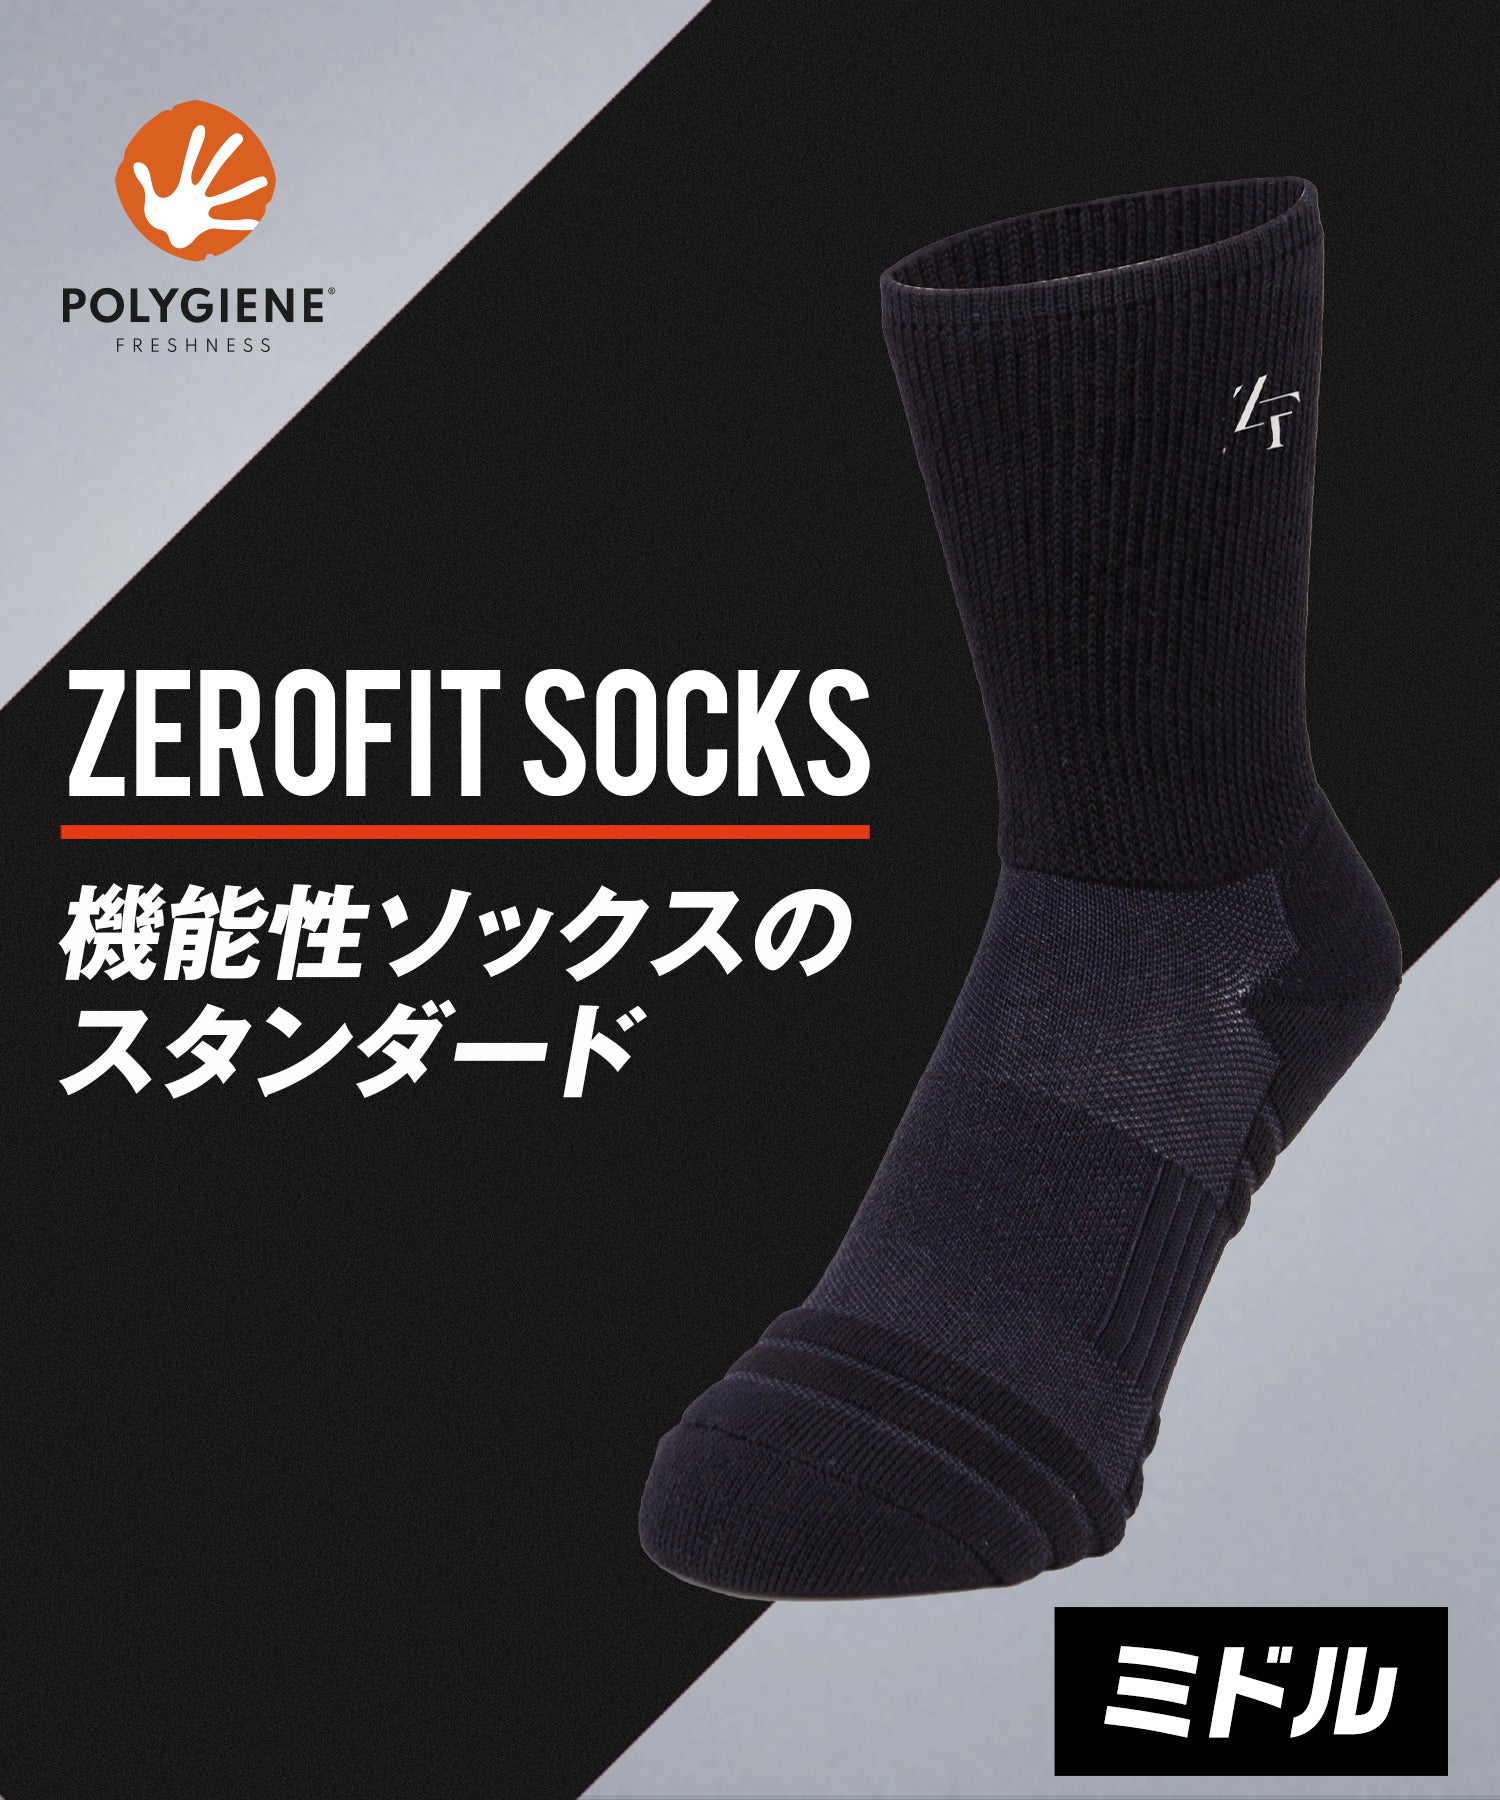 zero fit socks middle